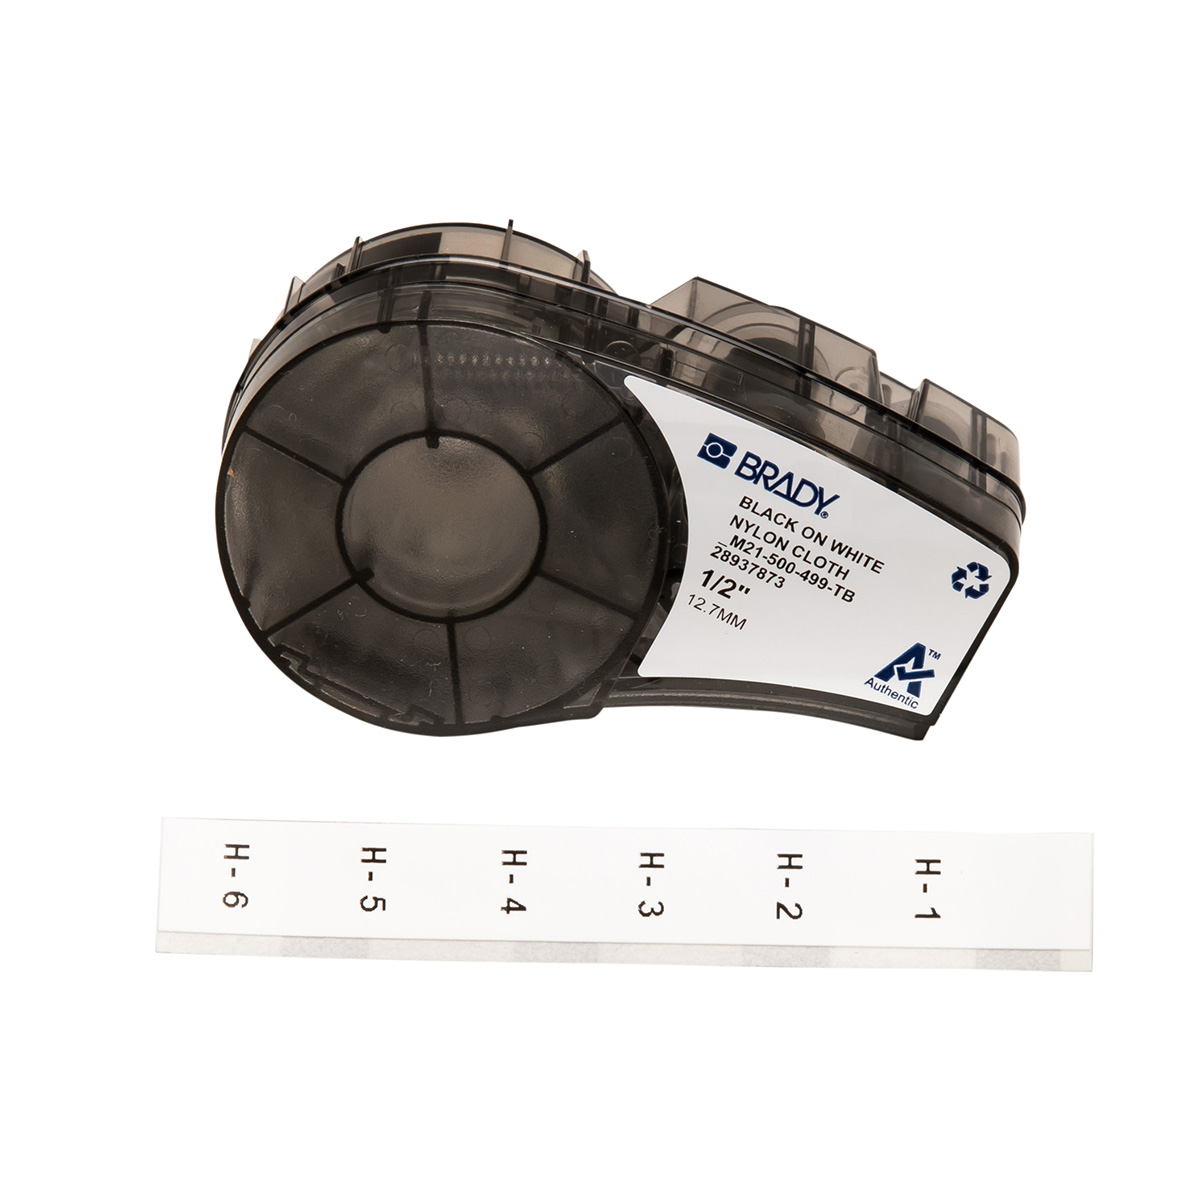 3PK Compatible for BRADY M21-750-595-WT Label Cartridge,Black/White,3/4 In W 